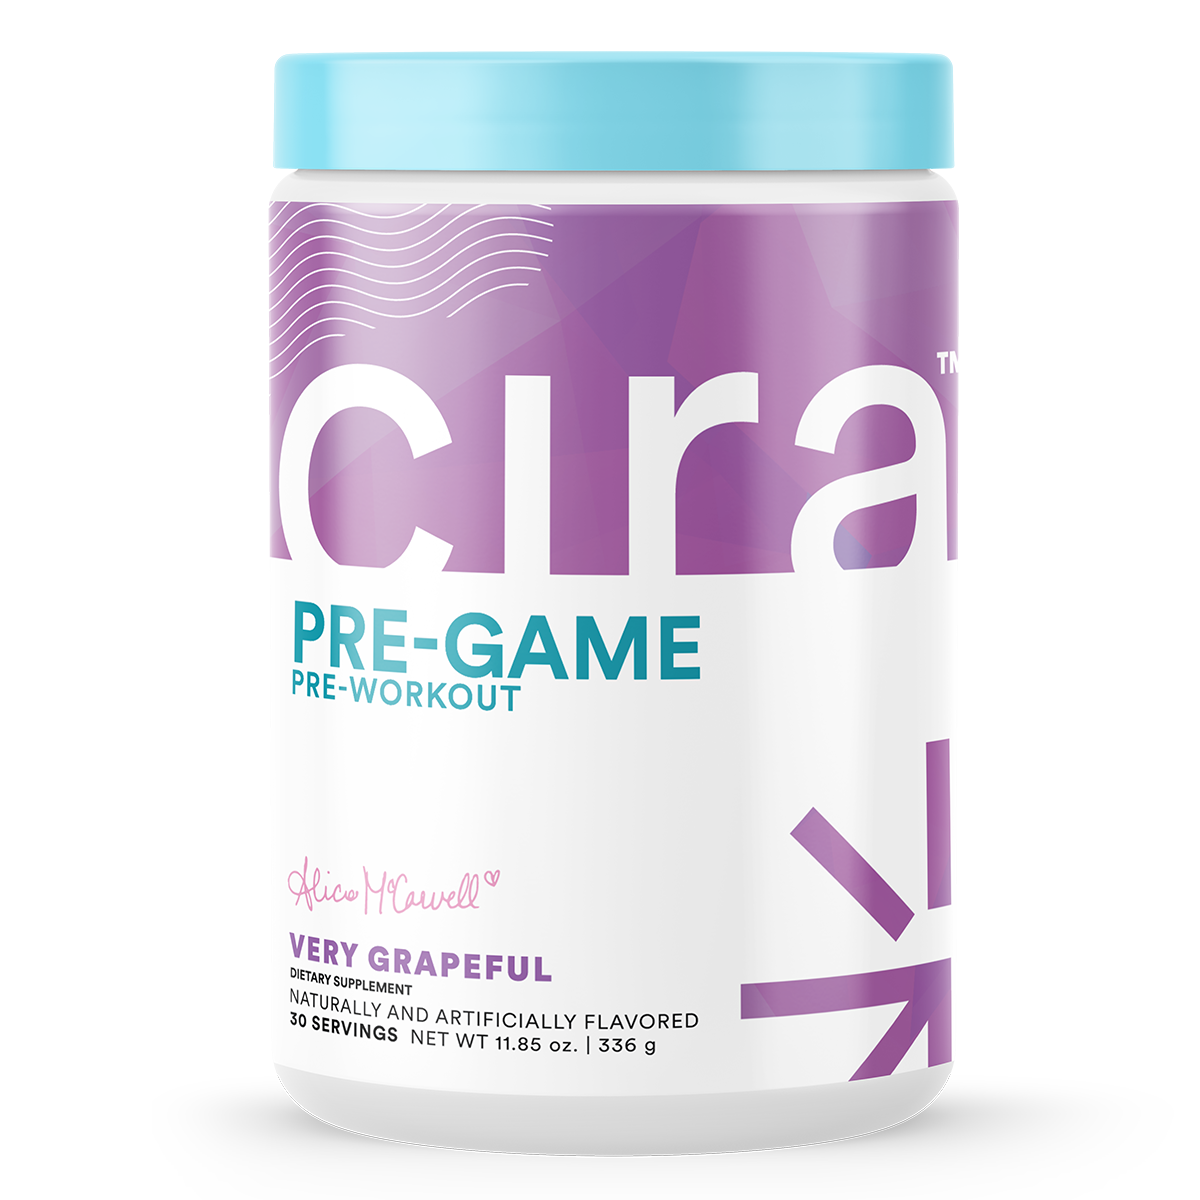 Very Grapeful Pre-Game ft. Alicia McCarvell | Cira Nutrition